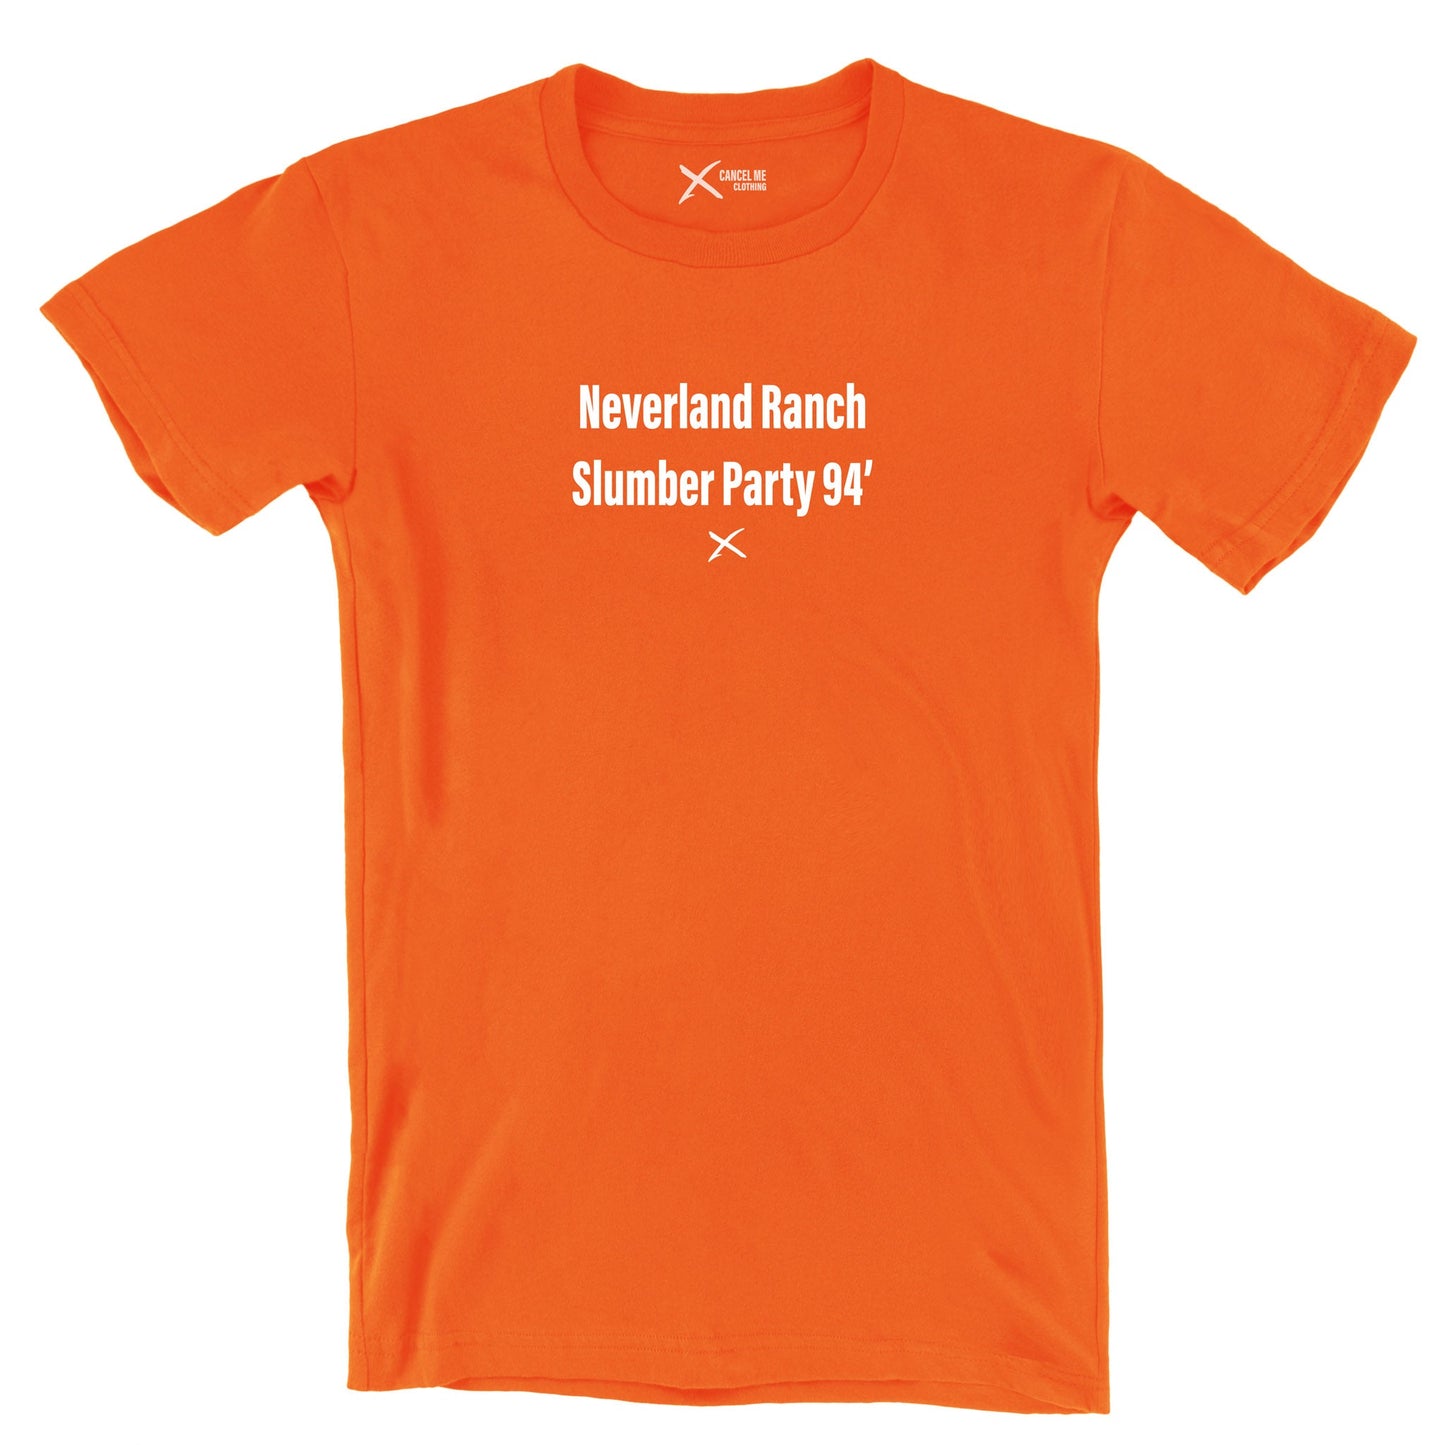 Neverland Ranch Slumber Party 94' - Shirt